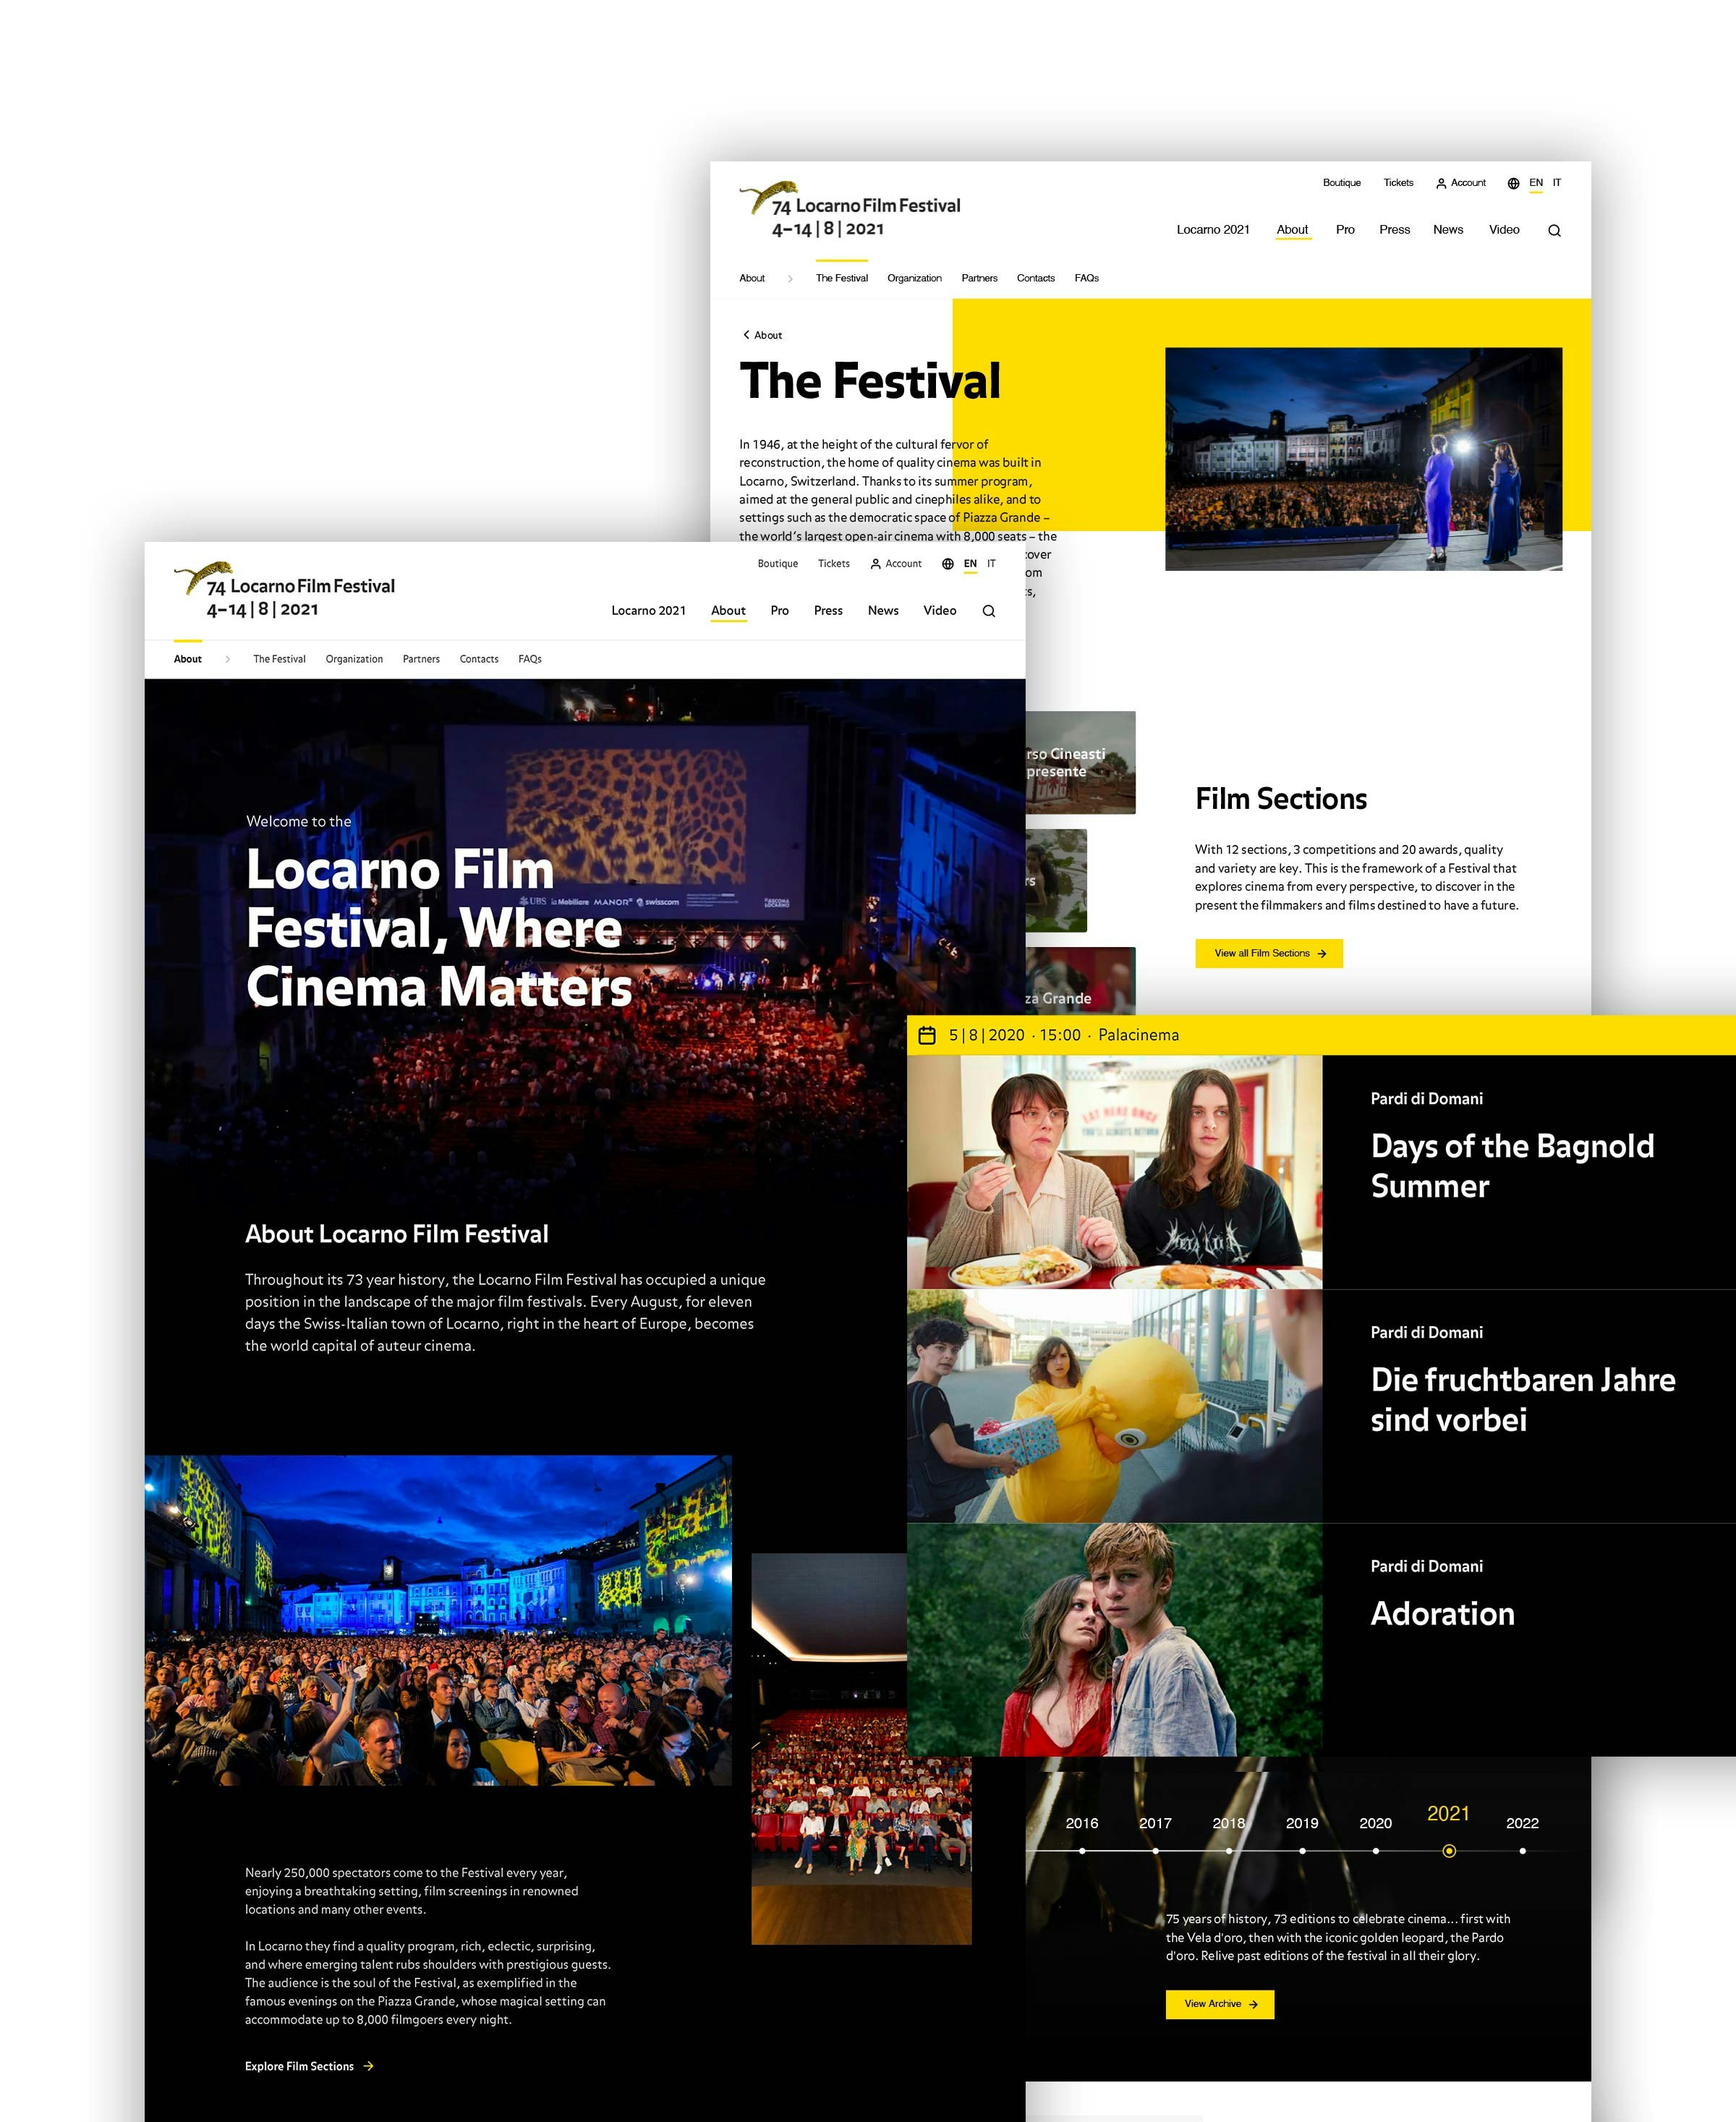 Main interfaces of the Locarno Film Festival platform